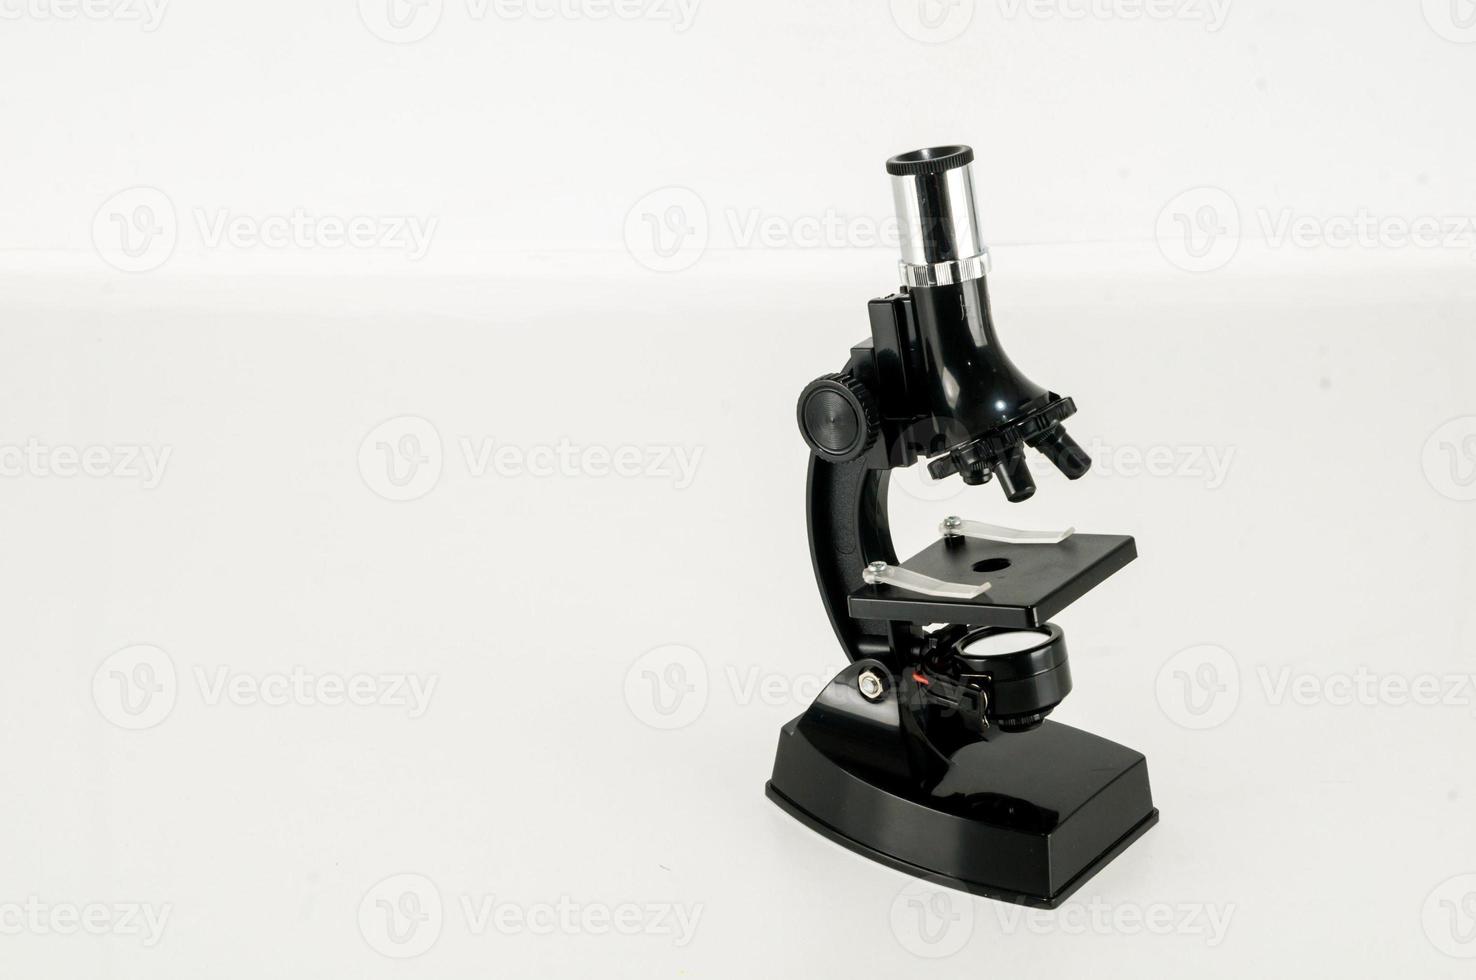 microscope sur blanc photo